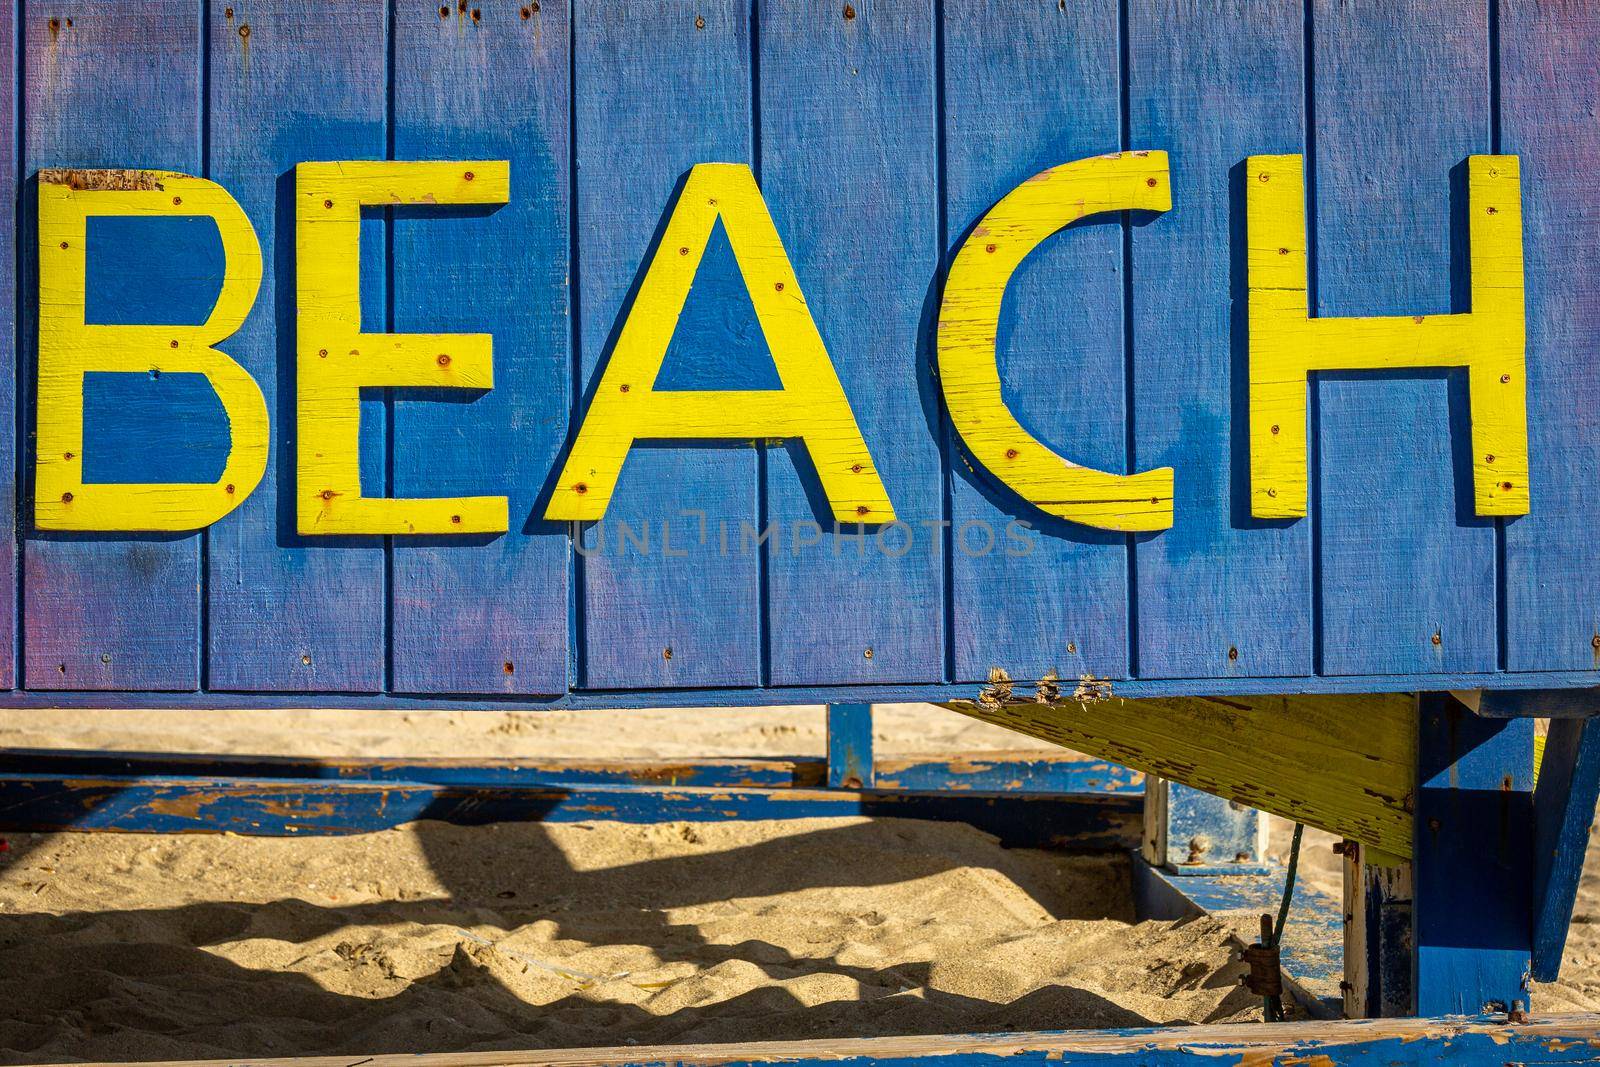 Miami Beach sign on wood lifeguard hut, South Beach, Florida by positivetravelart